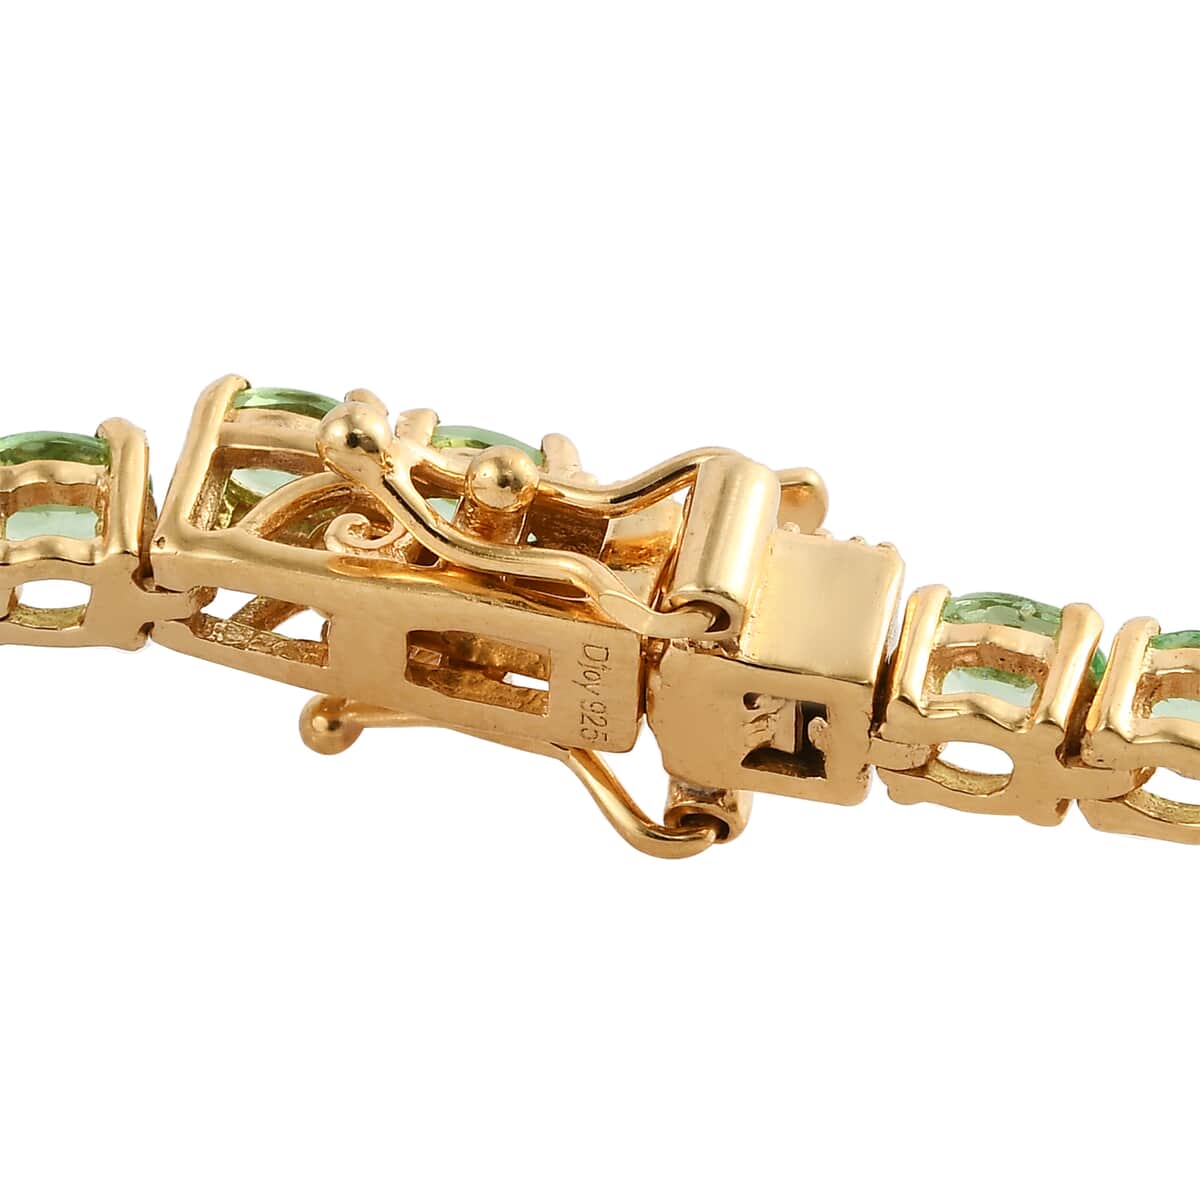 Natural Tsavorite Garnet Tennis Bracelet in Vermeil Yellow Gold Over Sterling Silver (7.25 In) 9.75 Grams 7.35 ctw image number 3